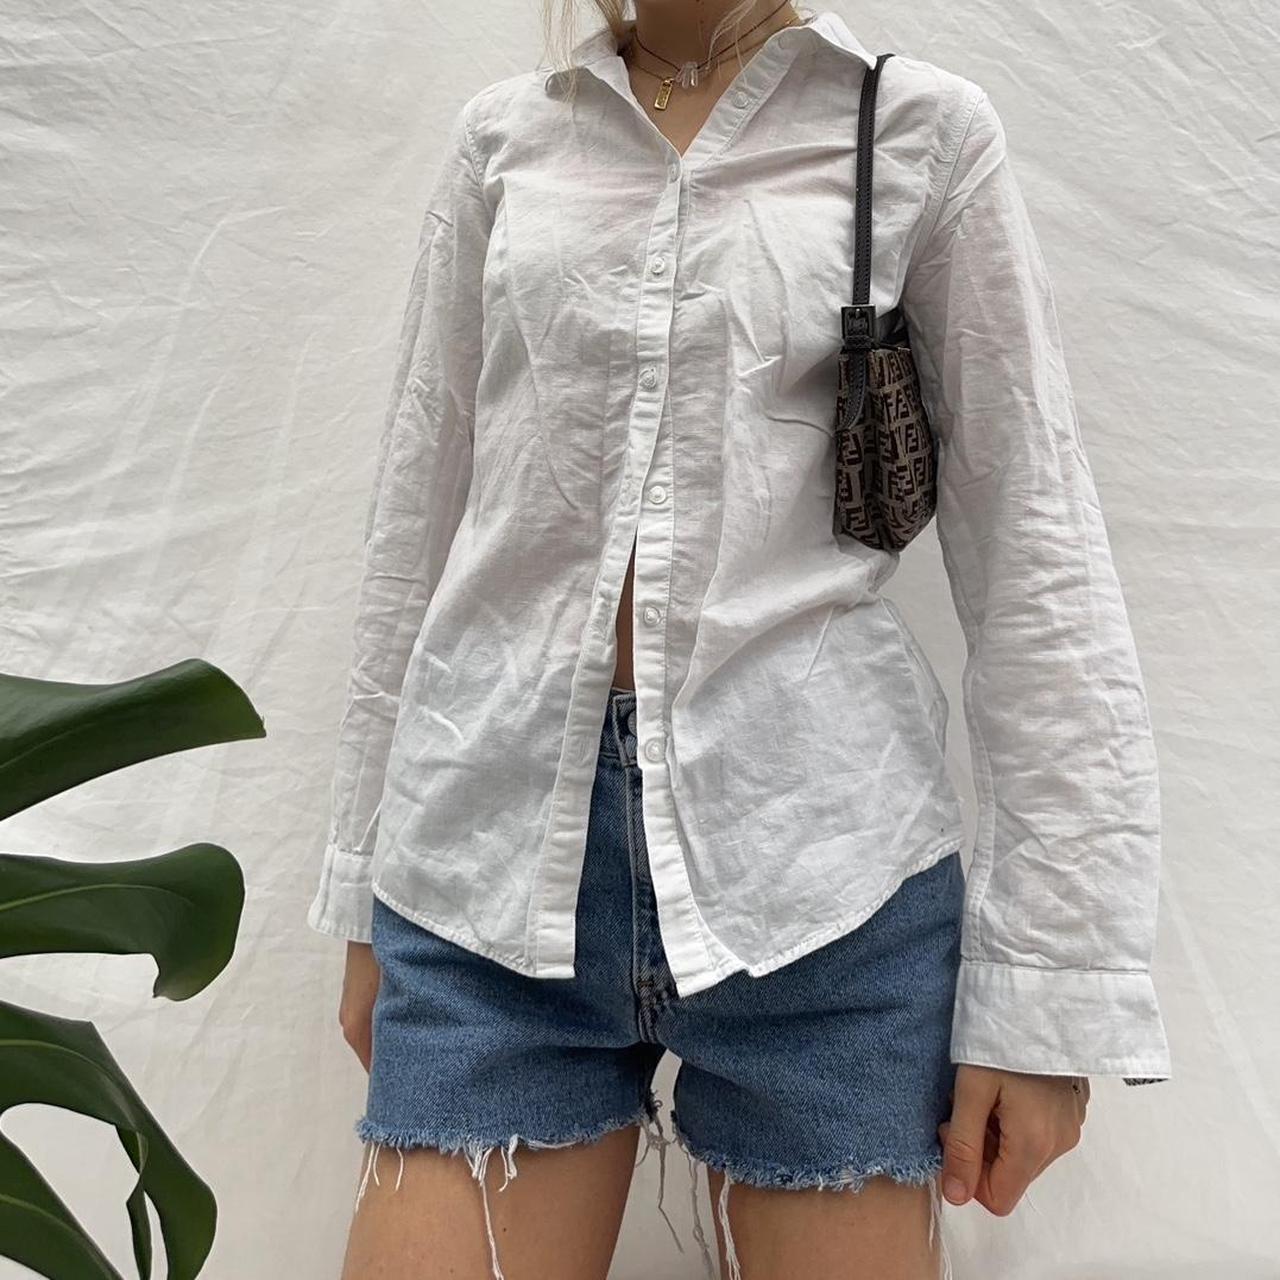 Vintage white linen button up shirt ☁️ Summer... - Depop